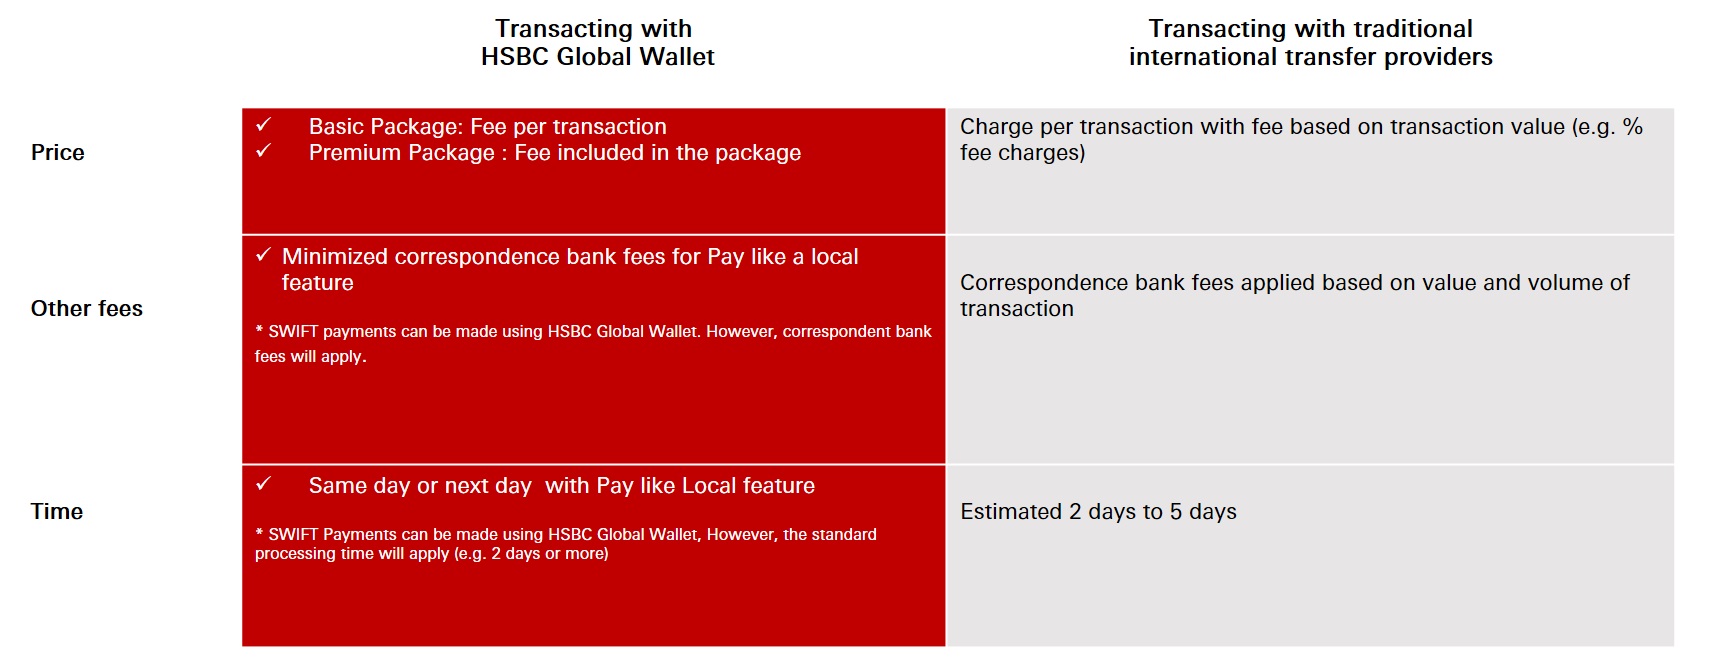 Advantages of HSBC global wallet